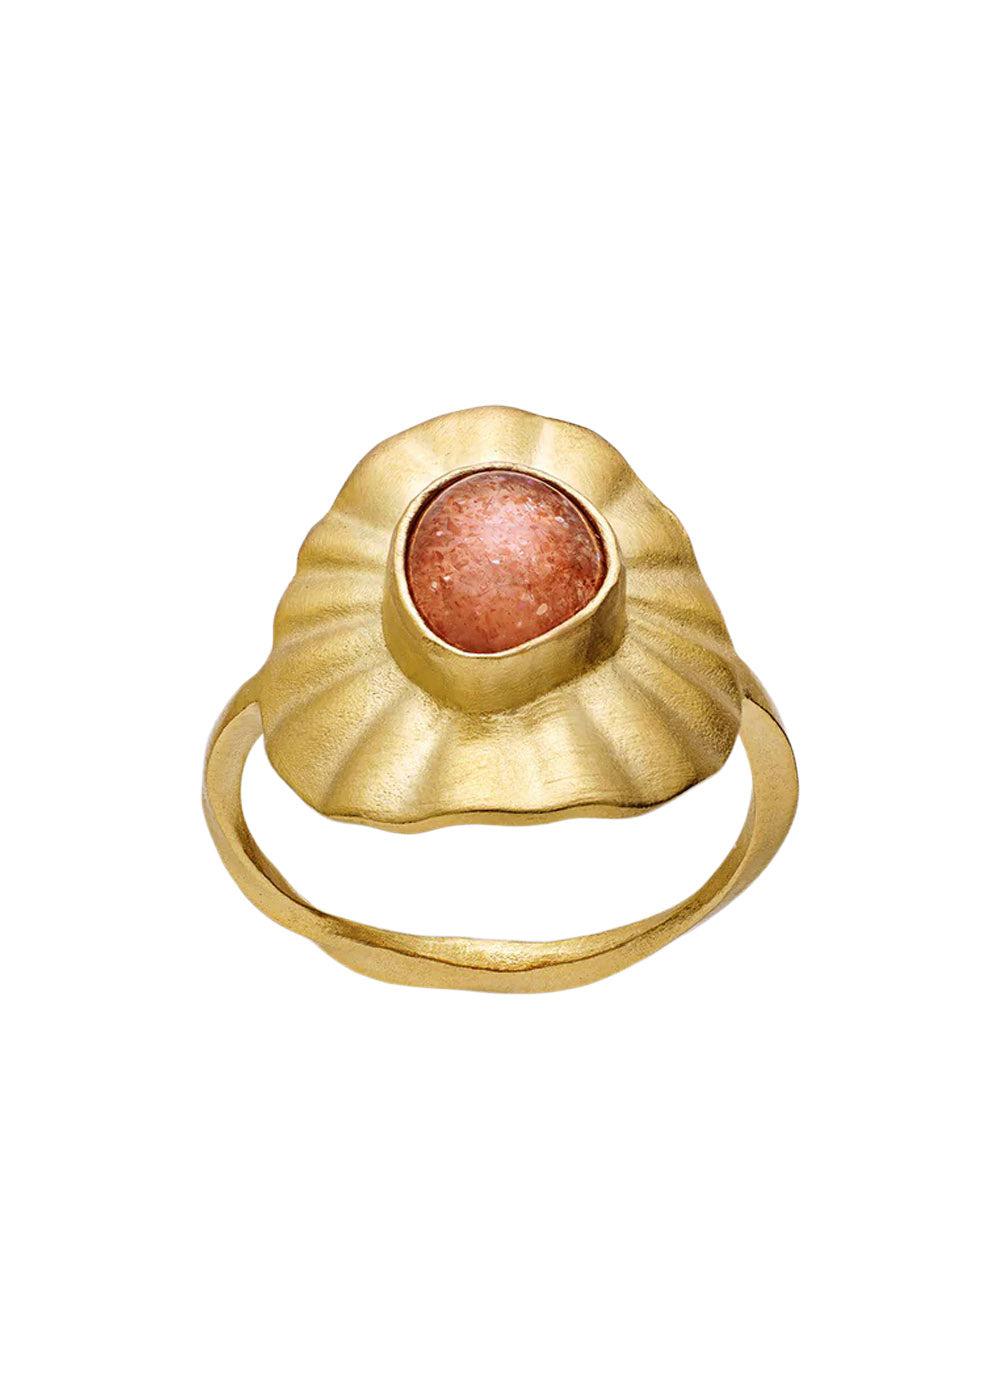 Maanestens Lotus Ring - Sterling Silver (925) Gold Plated. Køb ringe her.